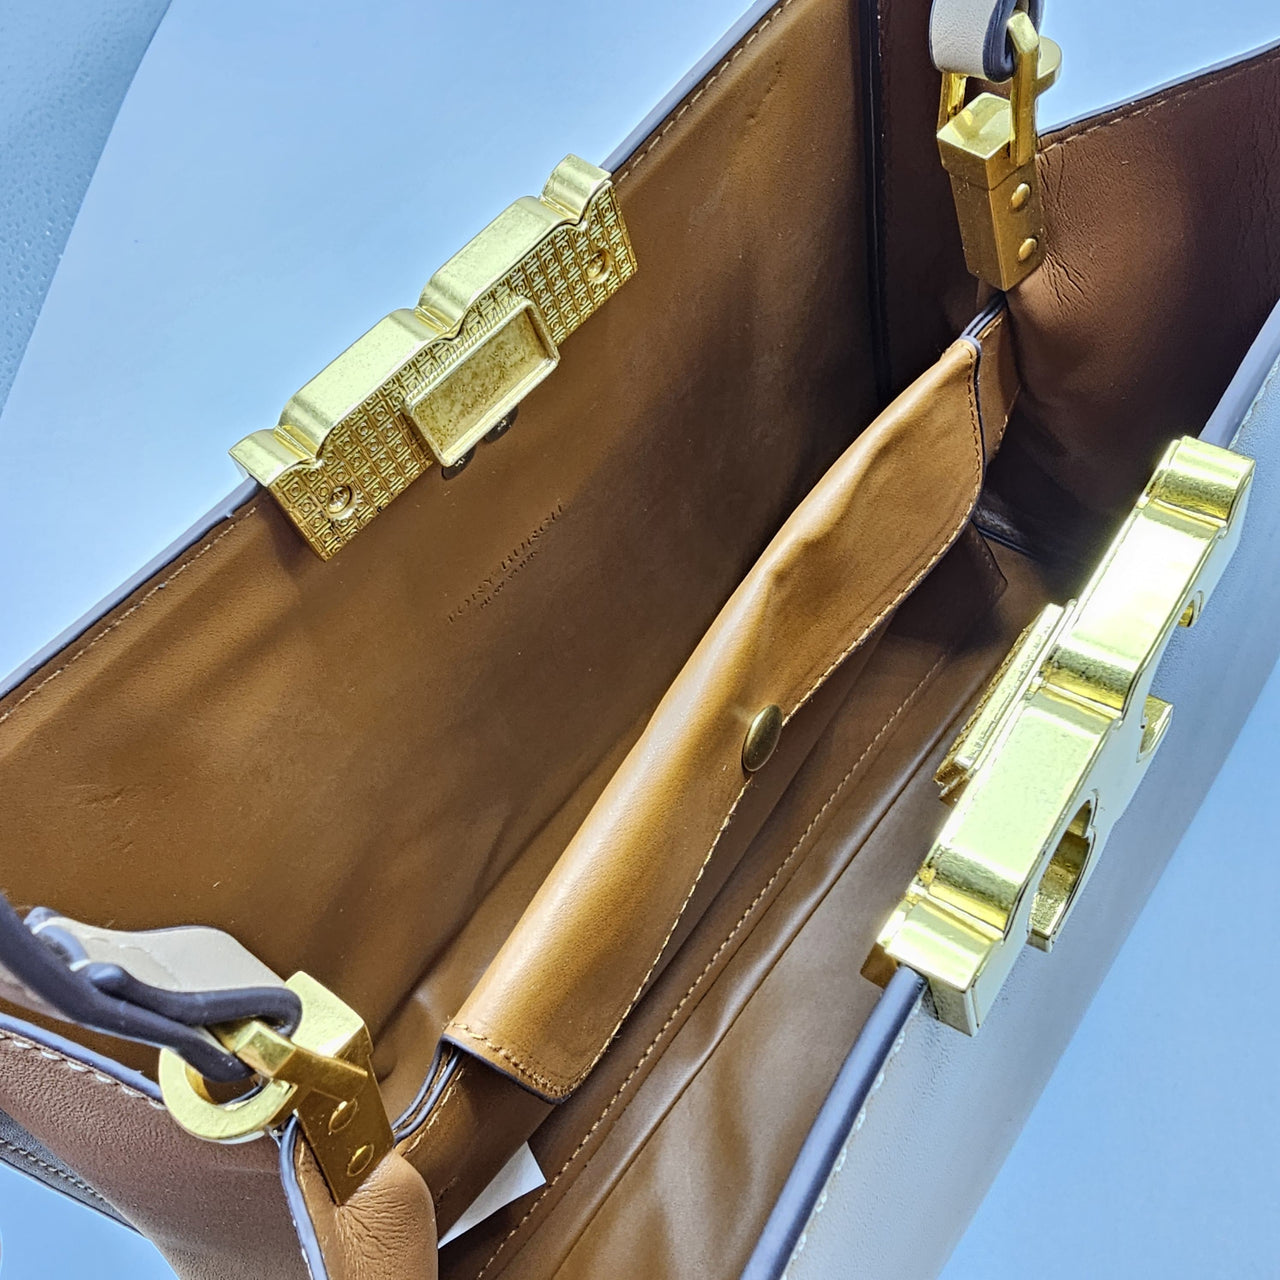 The Bag Couture Handbags, Wallets & Cases Tory Burch Eleanor Satchel Handbag Brown